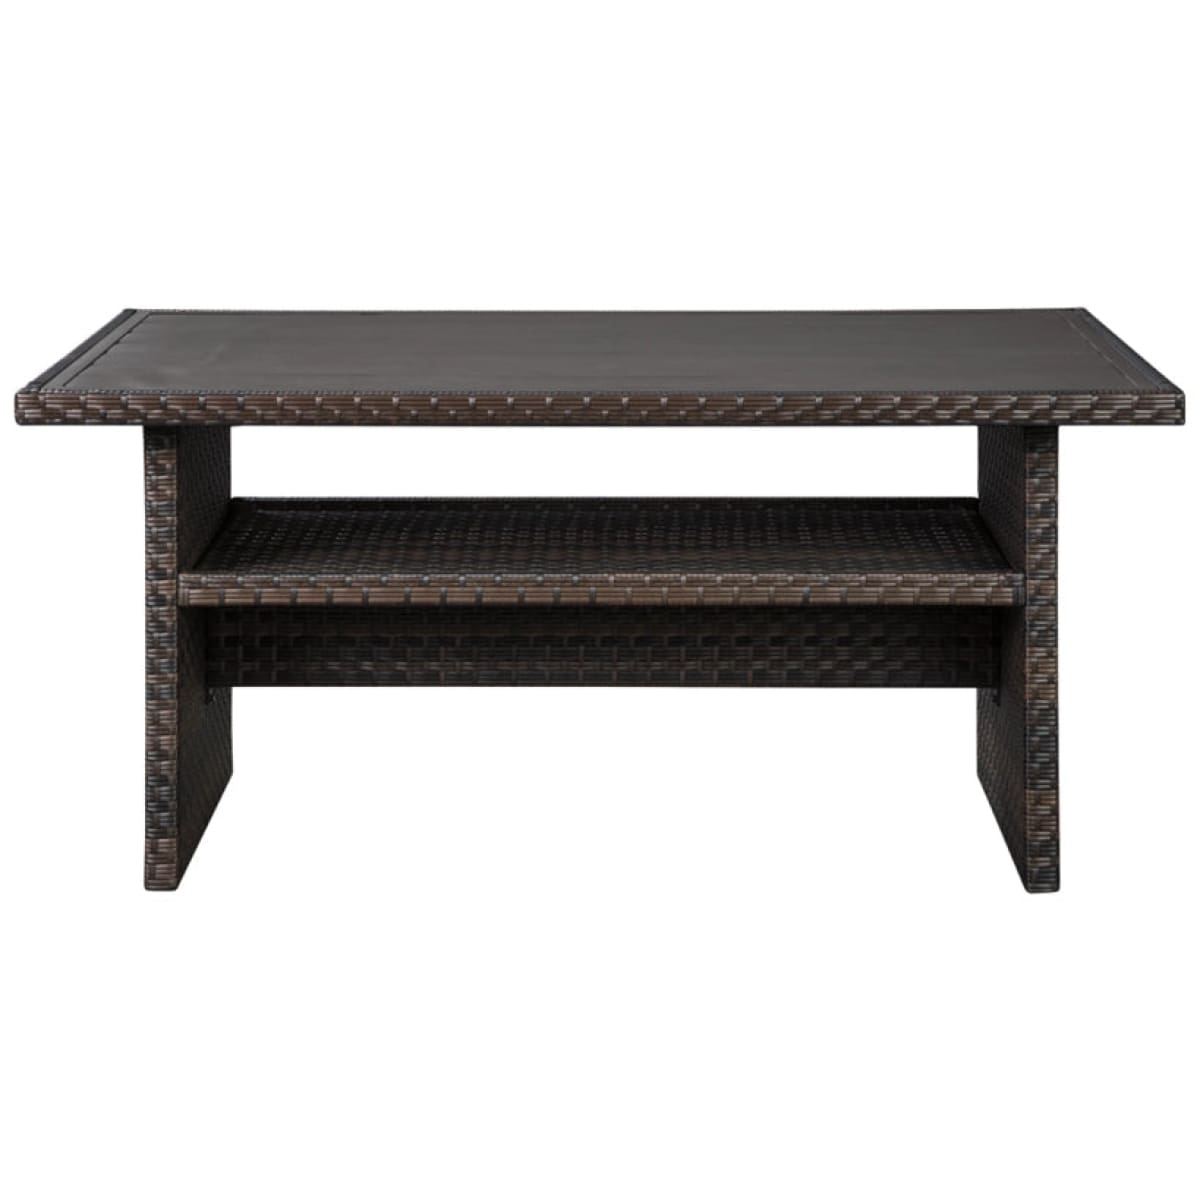 Easy Isle Multi-Use Table - 58.88 W x 33.38 D x 27.75 H - Outdoor Sofa